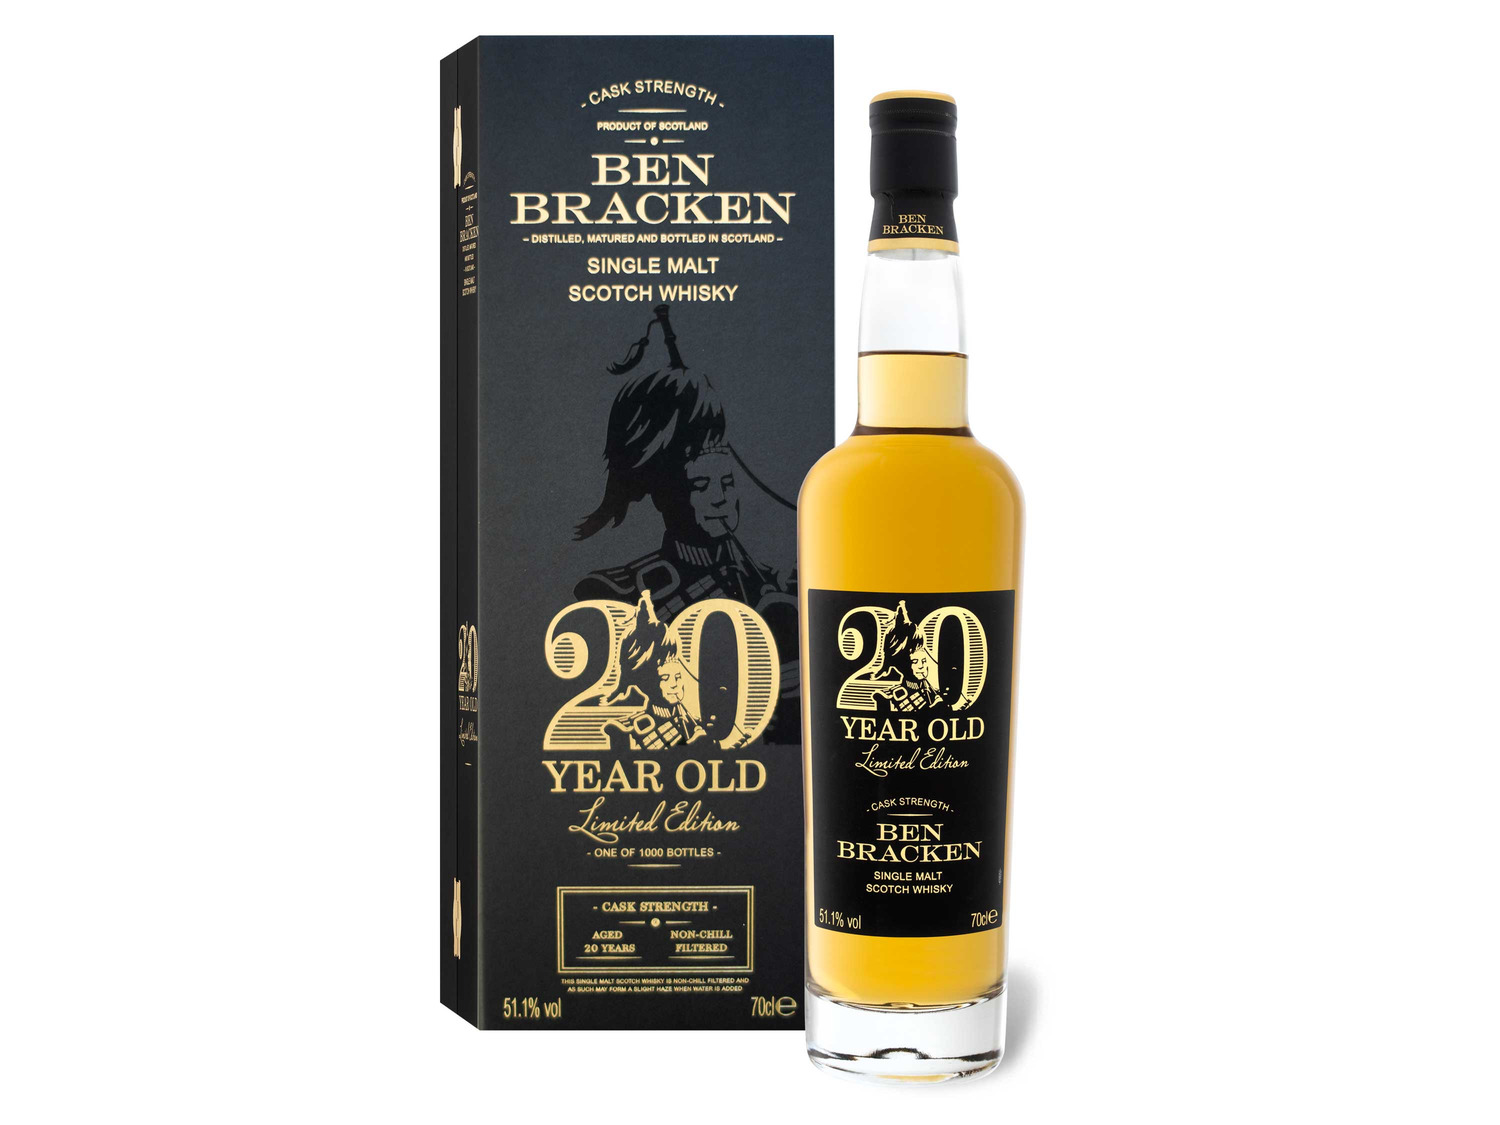 Ben Bracken Single Malt Scotch Whisky Limited Edition …